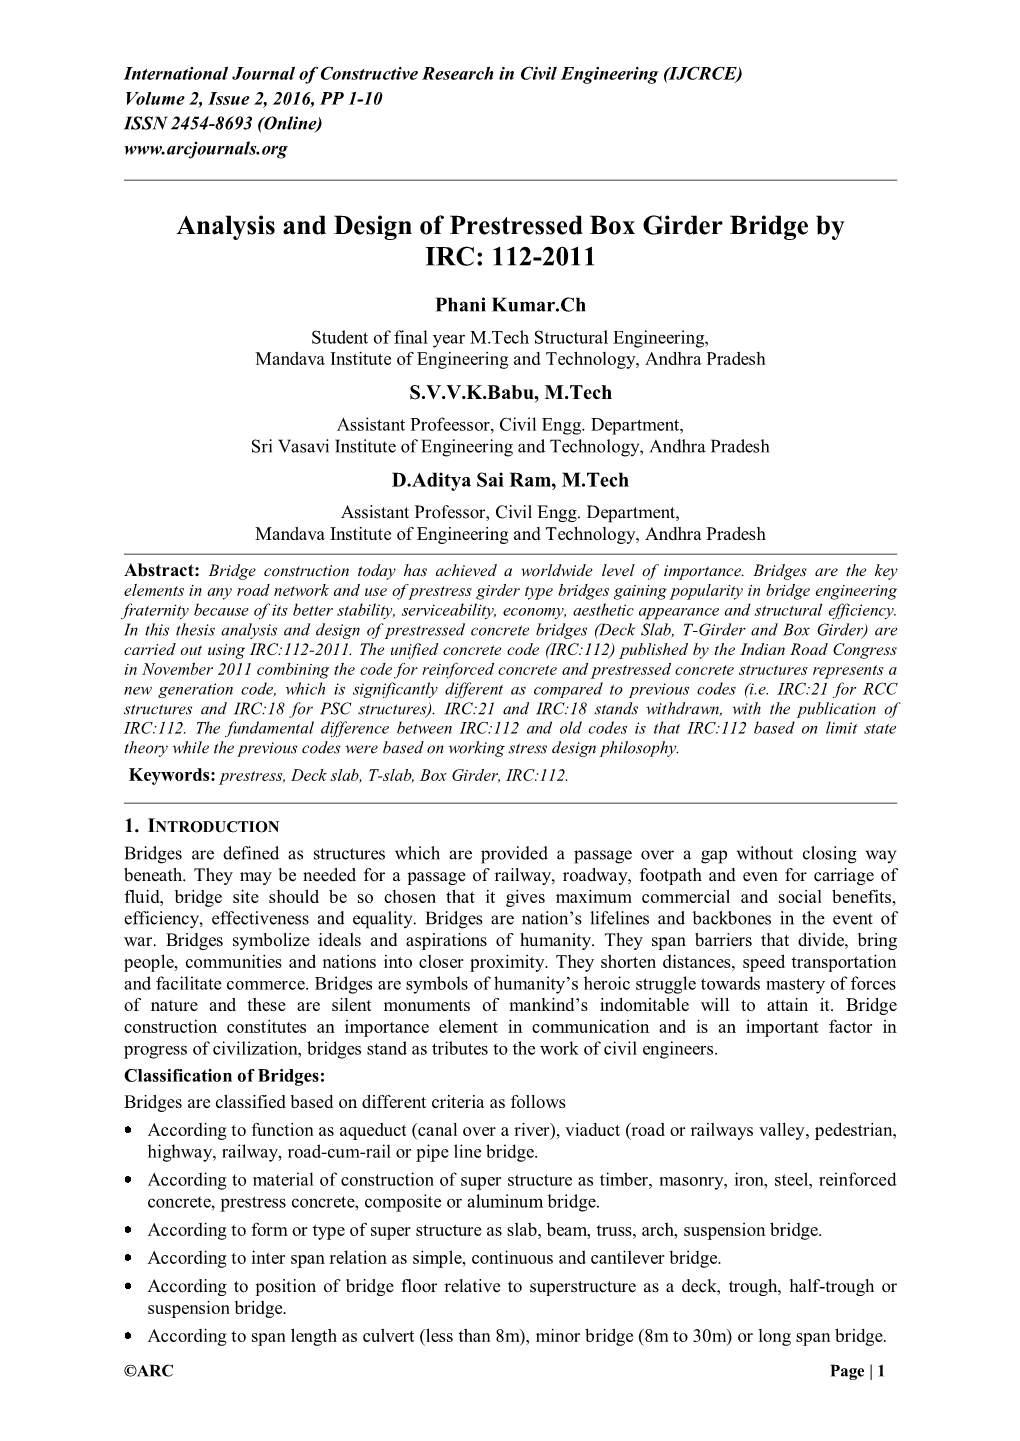 Analysis and Design of Prestressed Box Girder Bridge by IRC: 112-2011